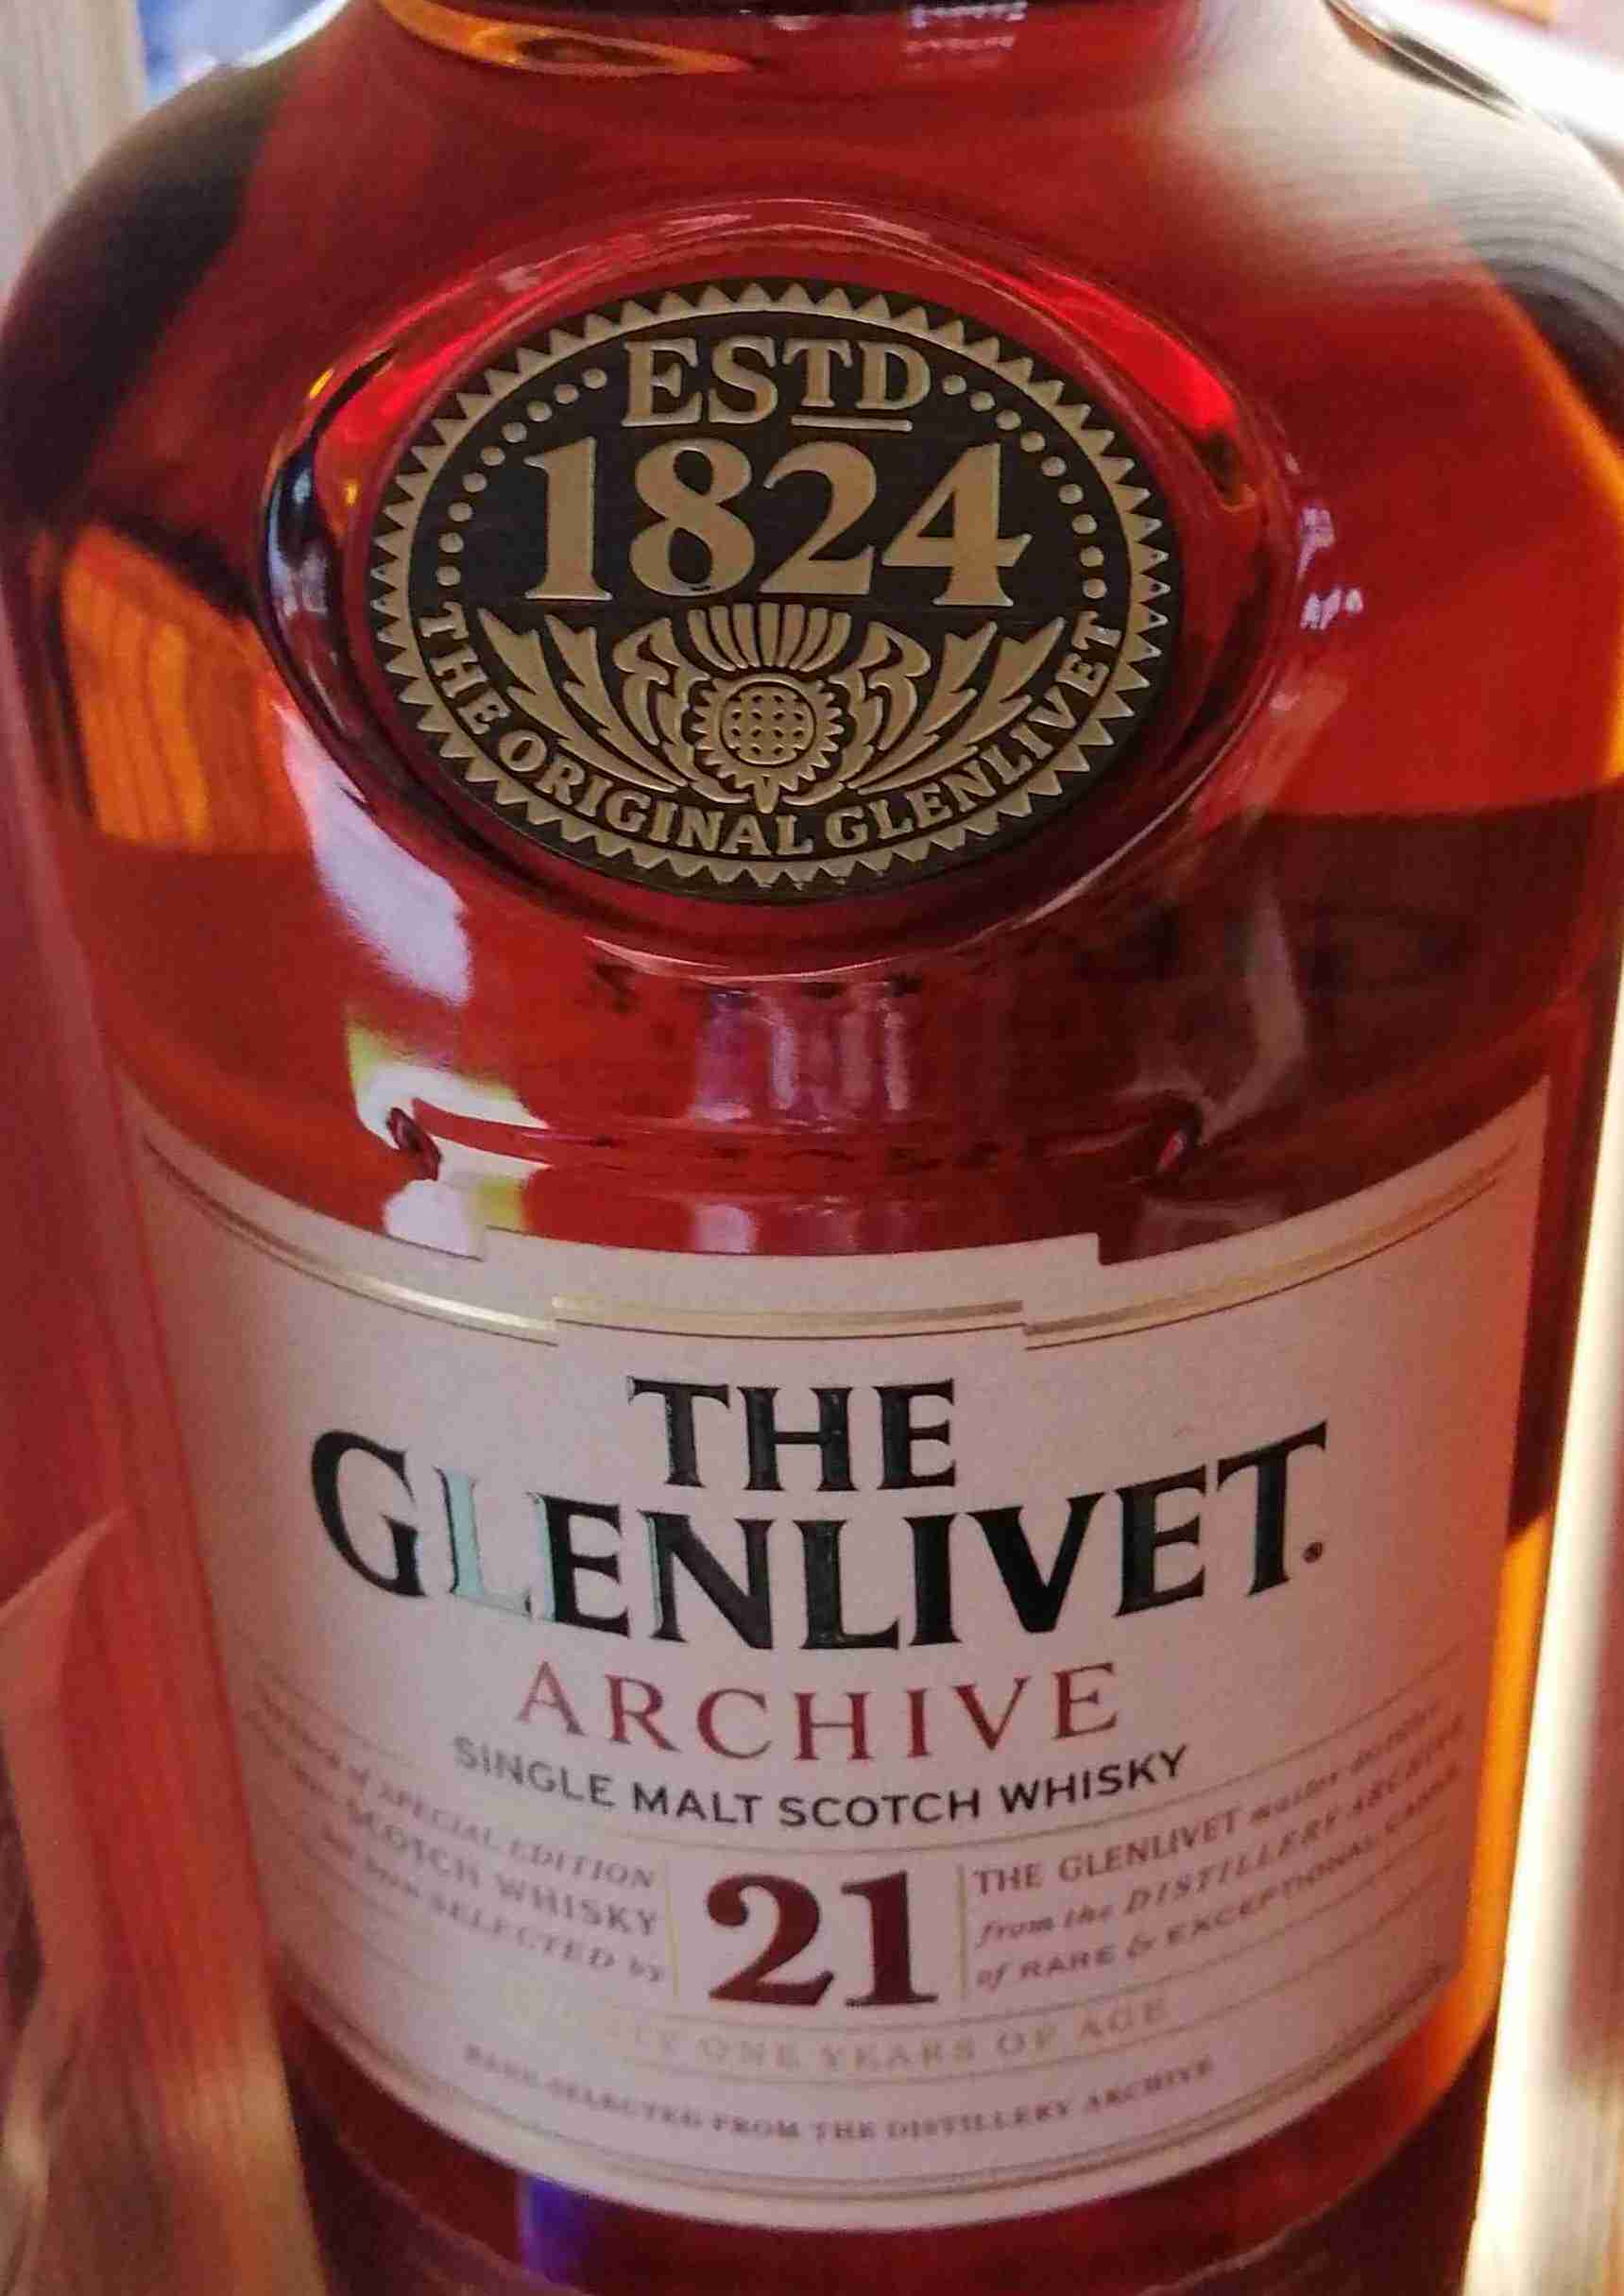 The Glenlivet Archive 21 Years of Age Single Malt Scotch Whisky